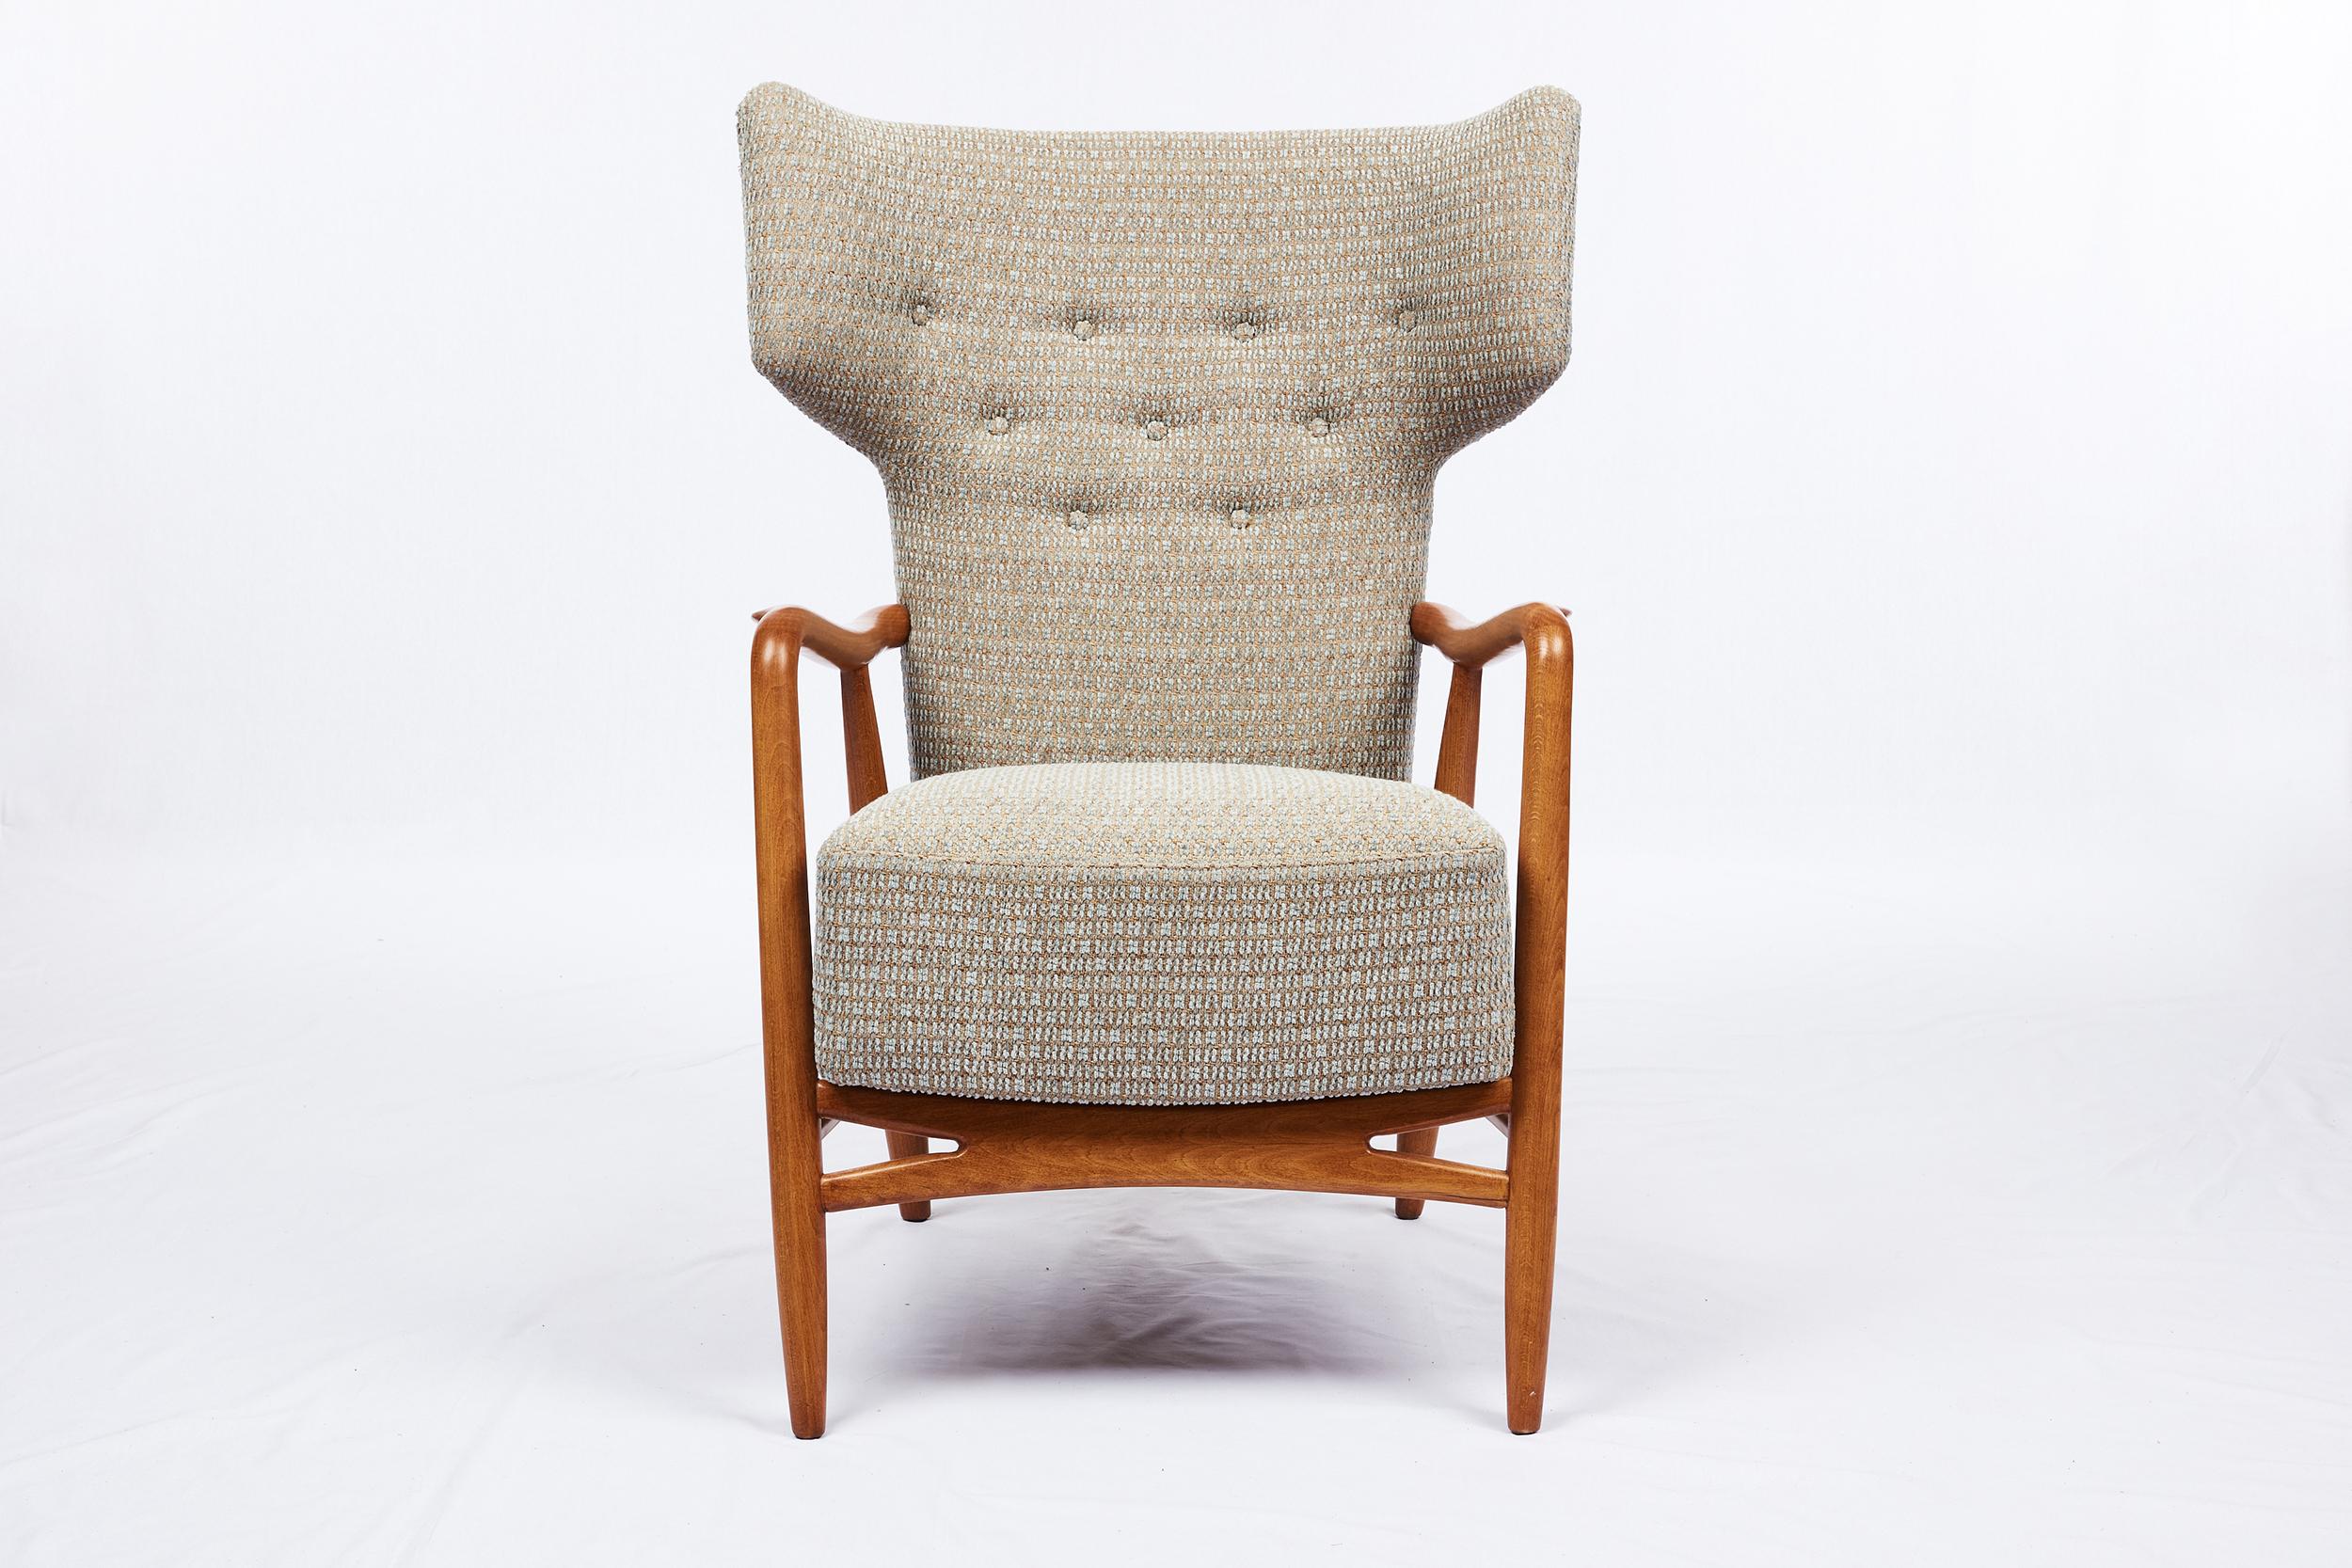 Eva Koppel wingback lounge chair designed in 1947.